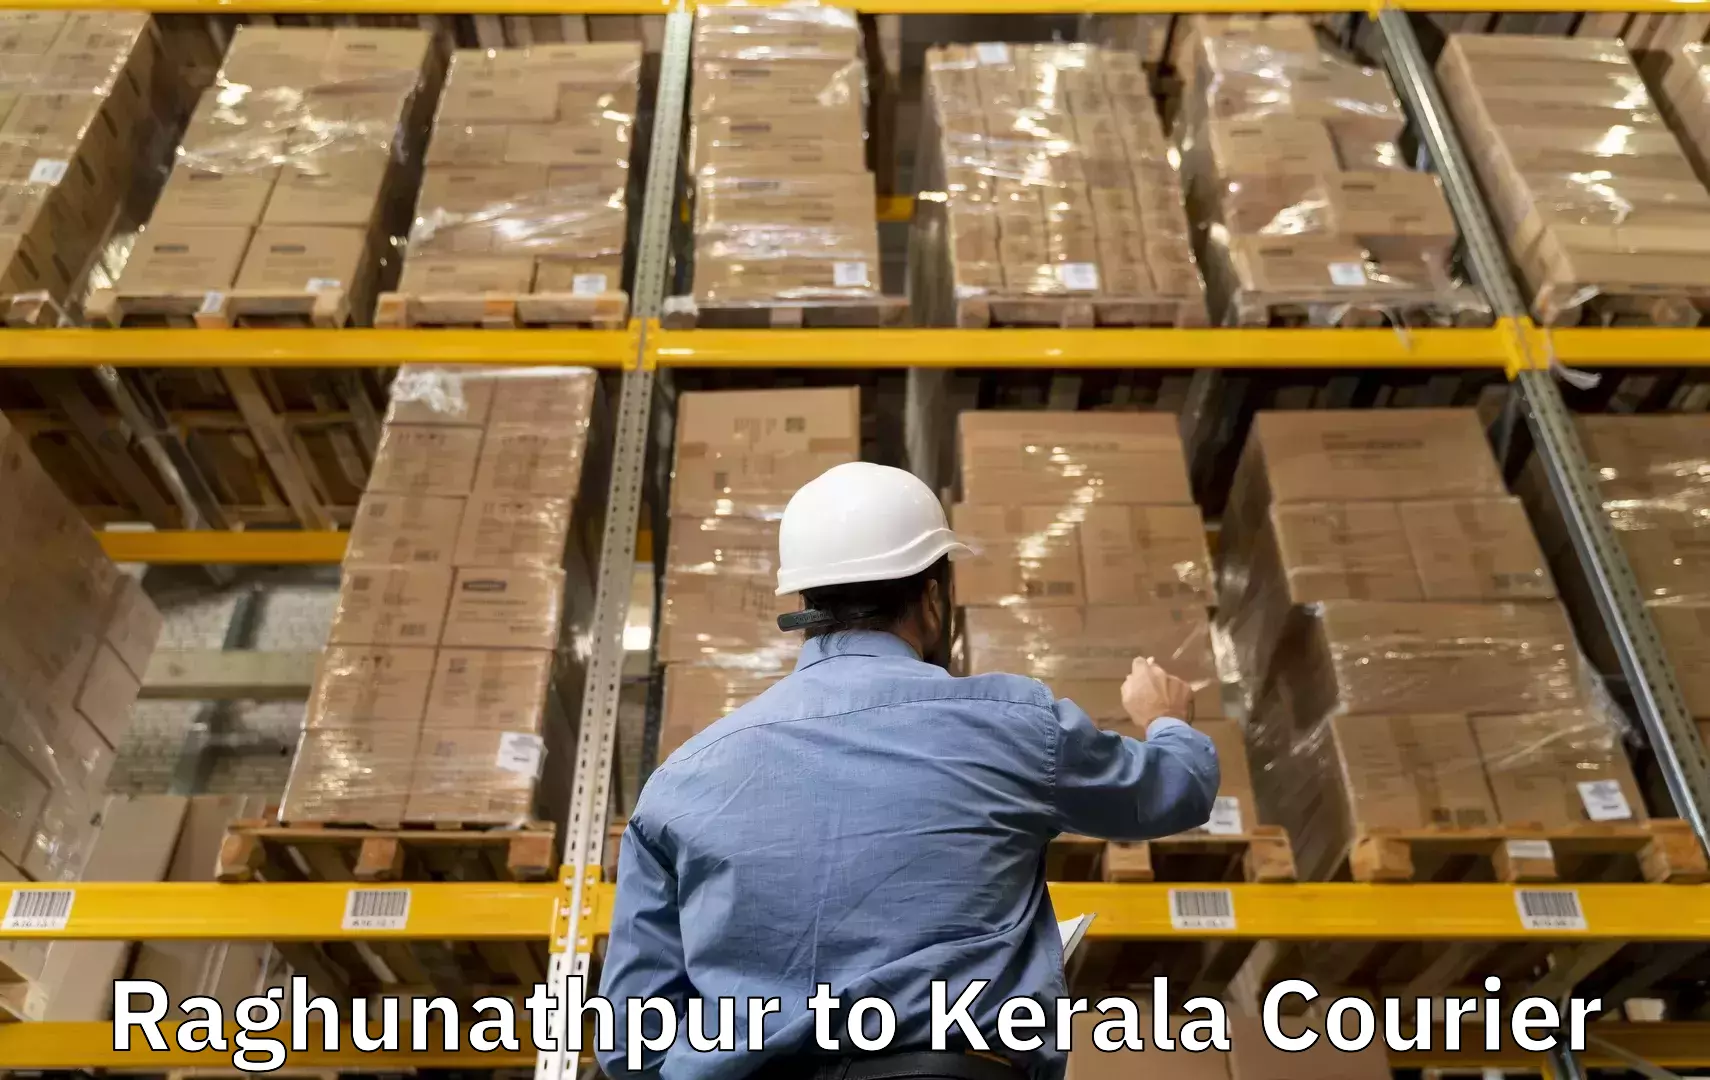 Luggage shipment specialists Raghunathpur to Kochi